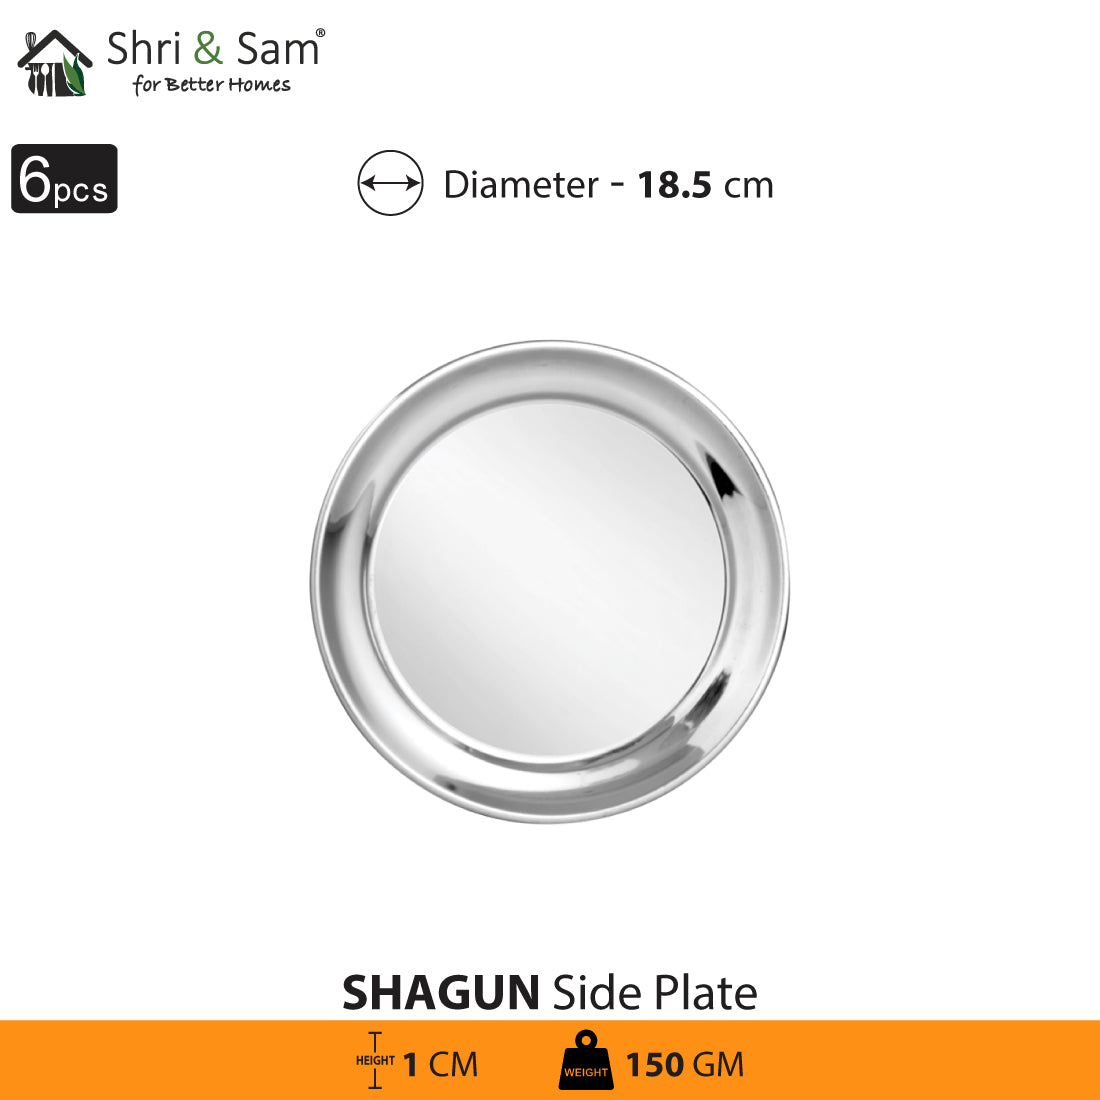 Stainless Steel 6 PCS Side Plate Shagun